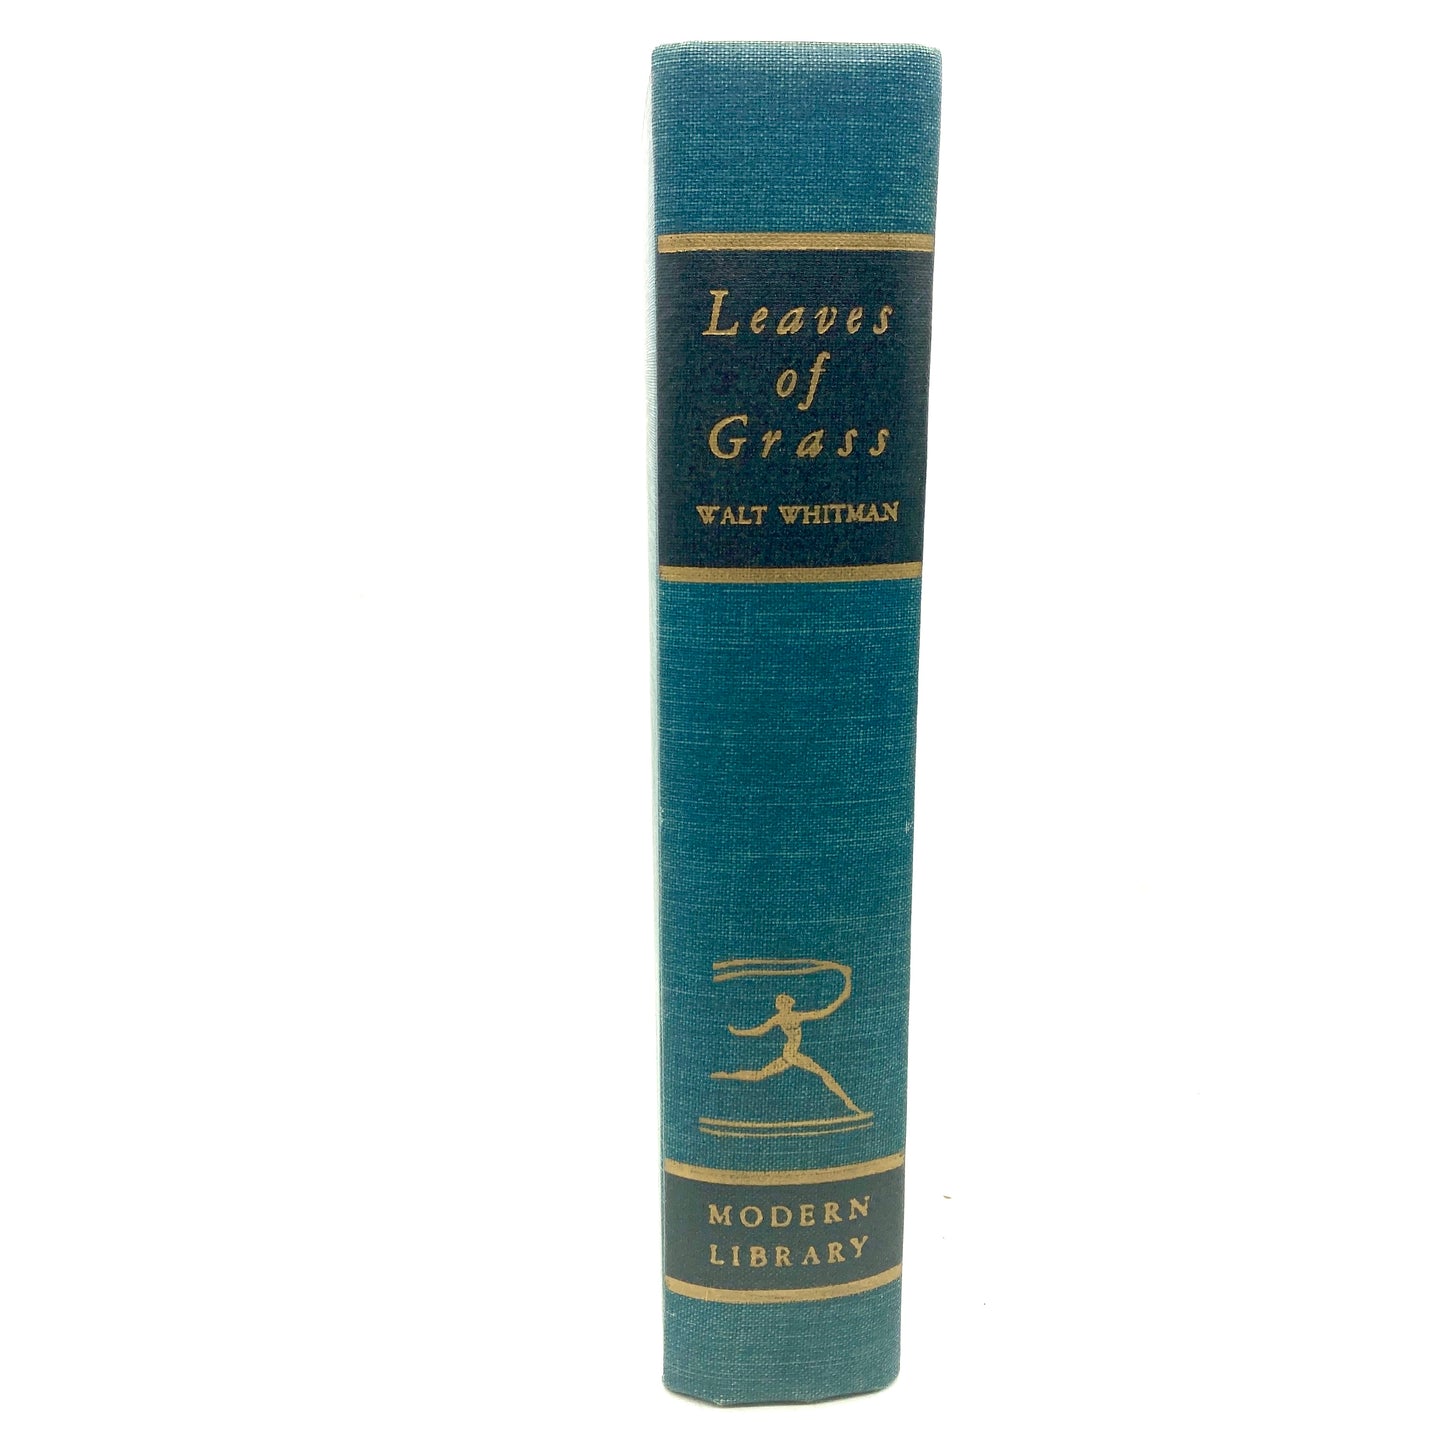 WHITMAN, Walt "Leaves of Grass" [Modern Library, n.d./c1940]